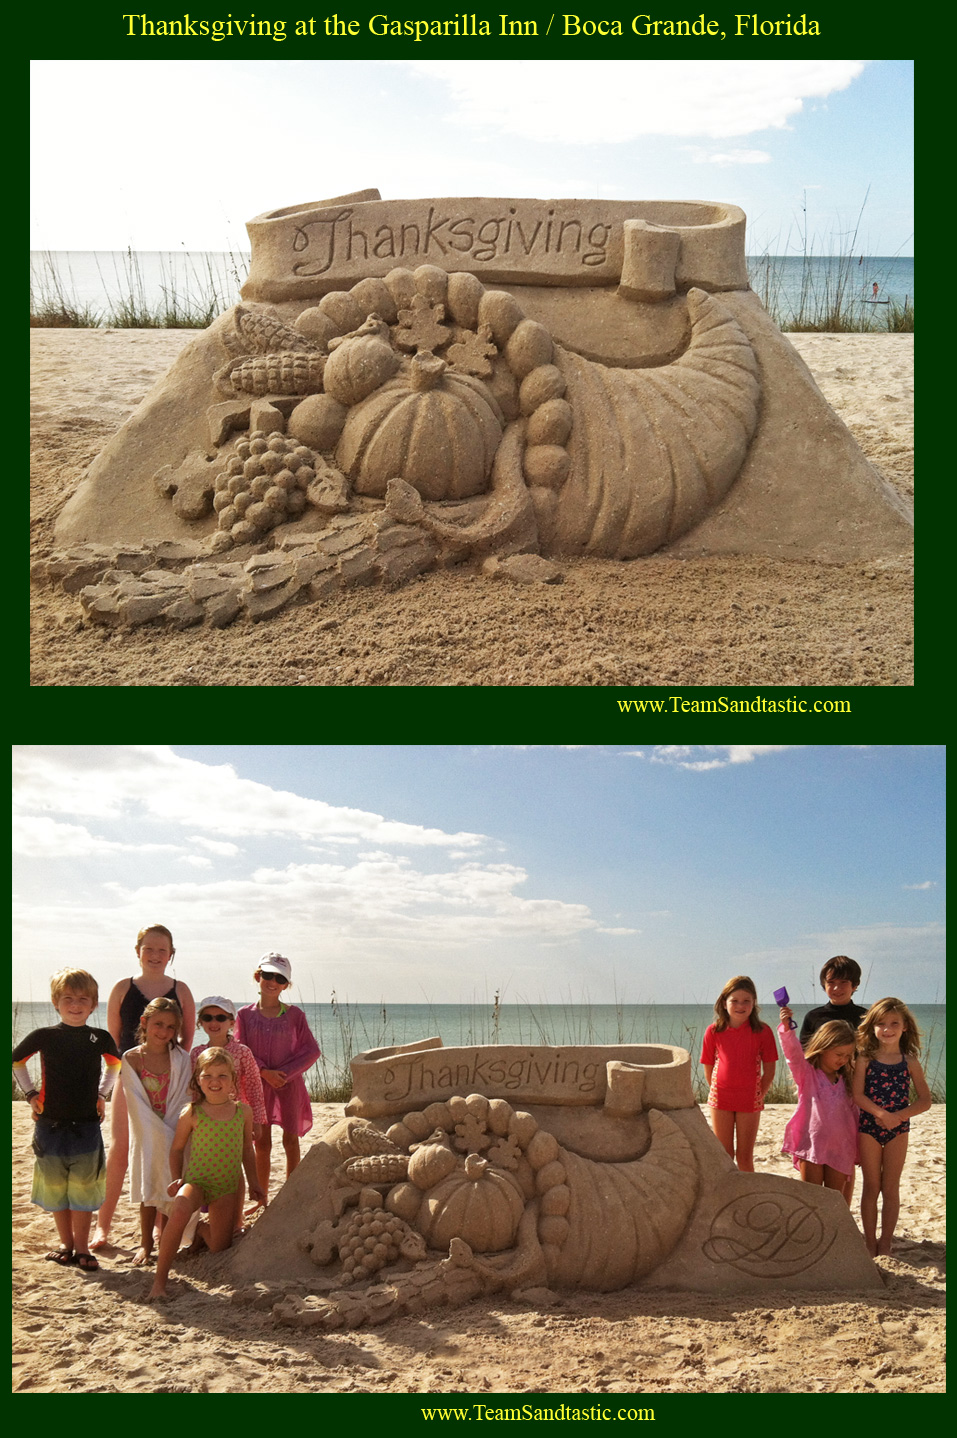 Gasparilla Inn Sand Sculpture